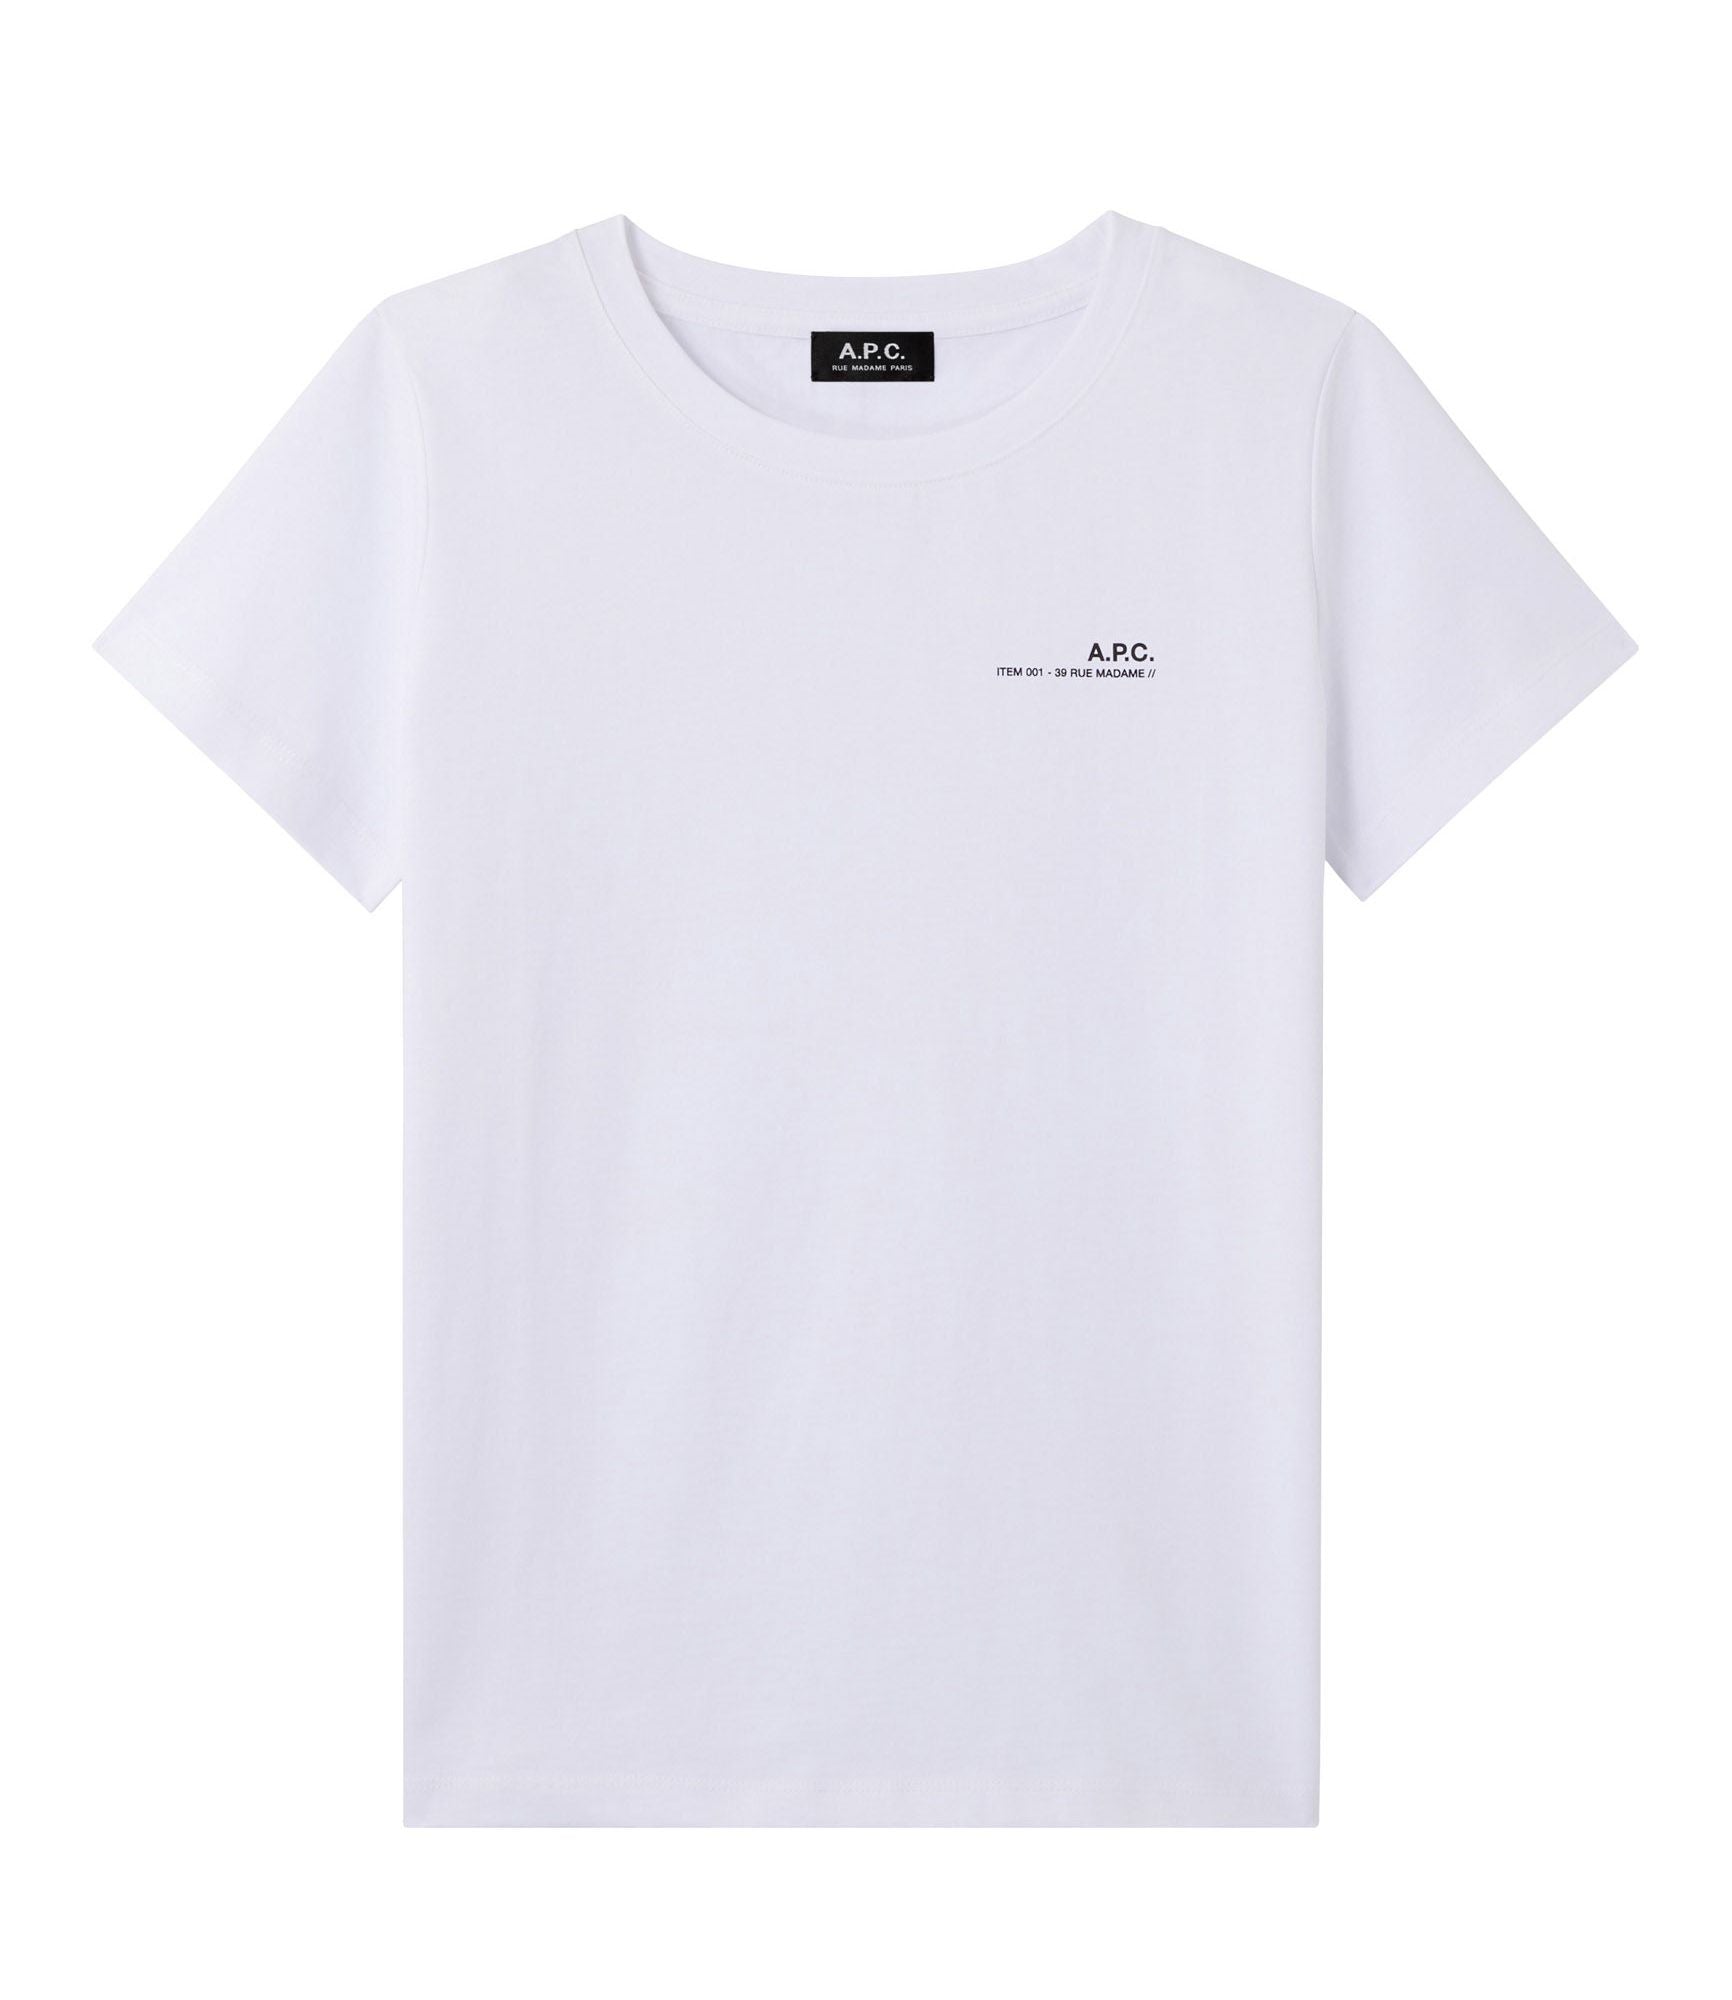 T-shirt item f, white